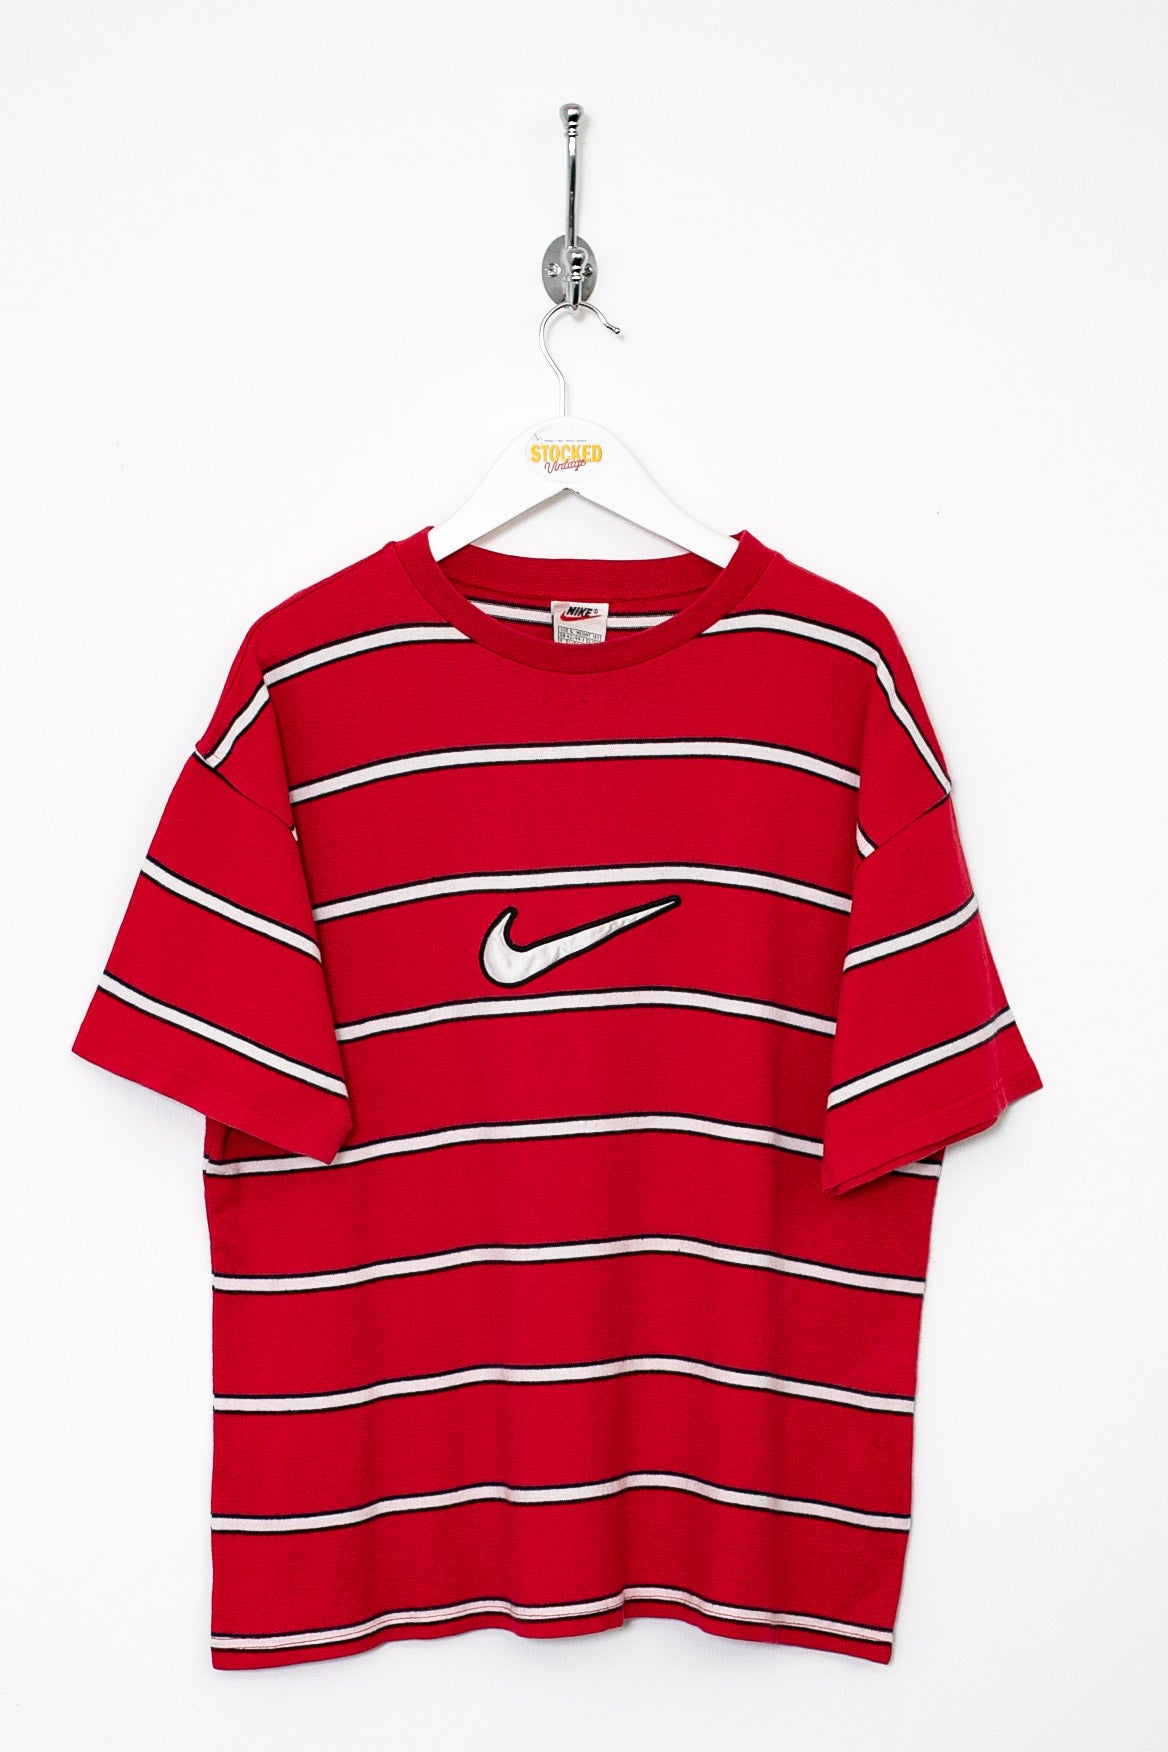 90s Nike Striped Tee (M)